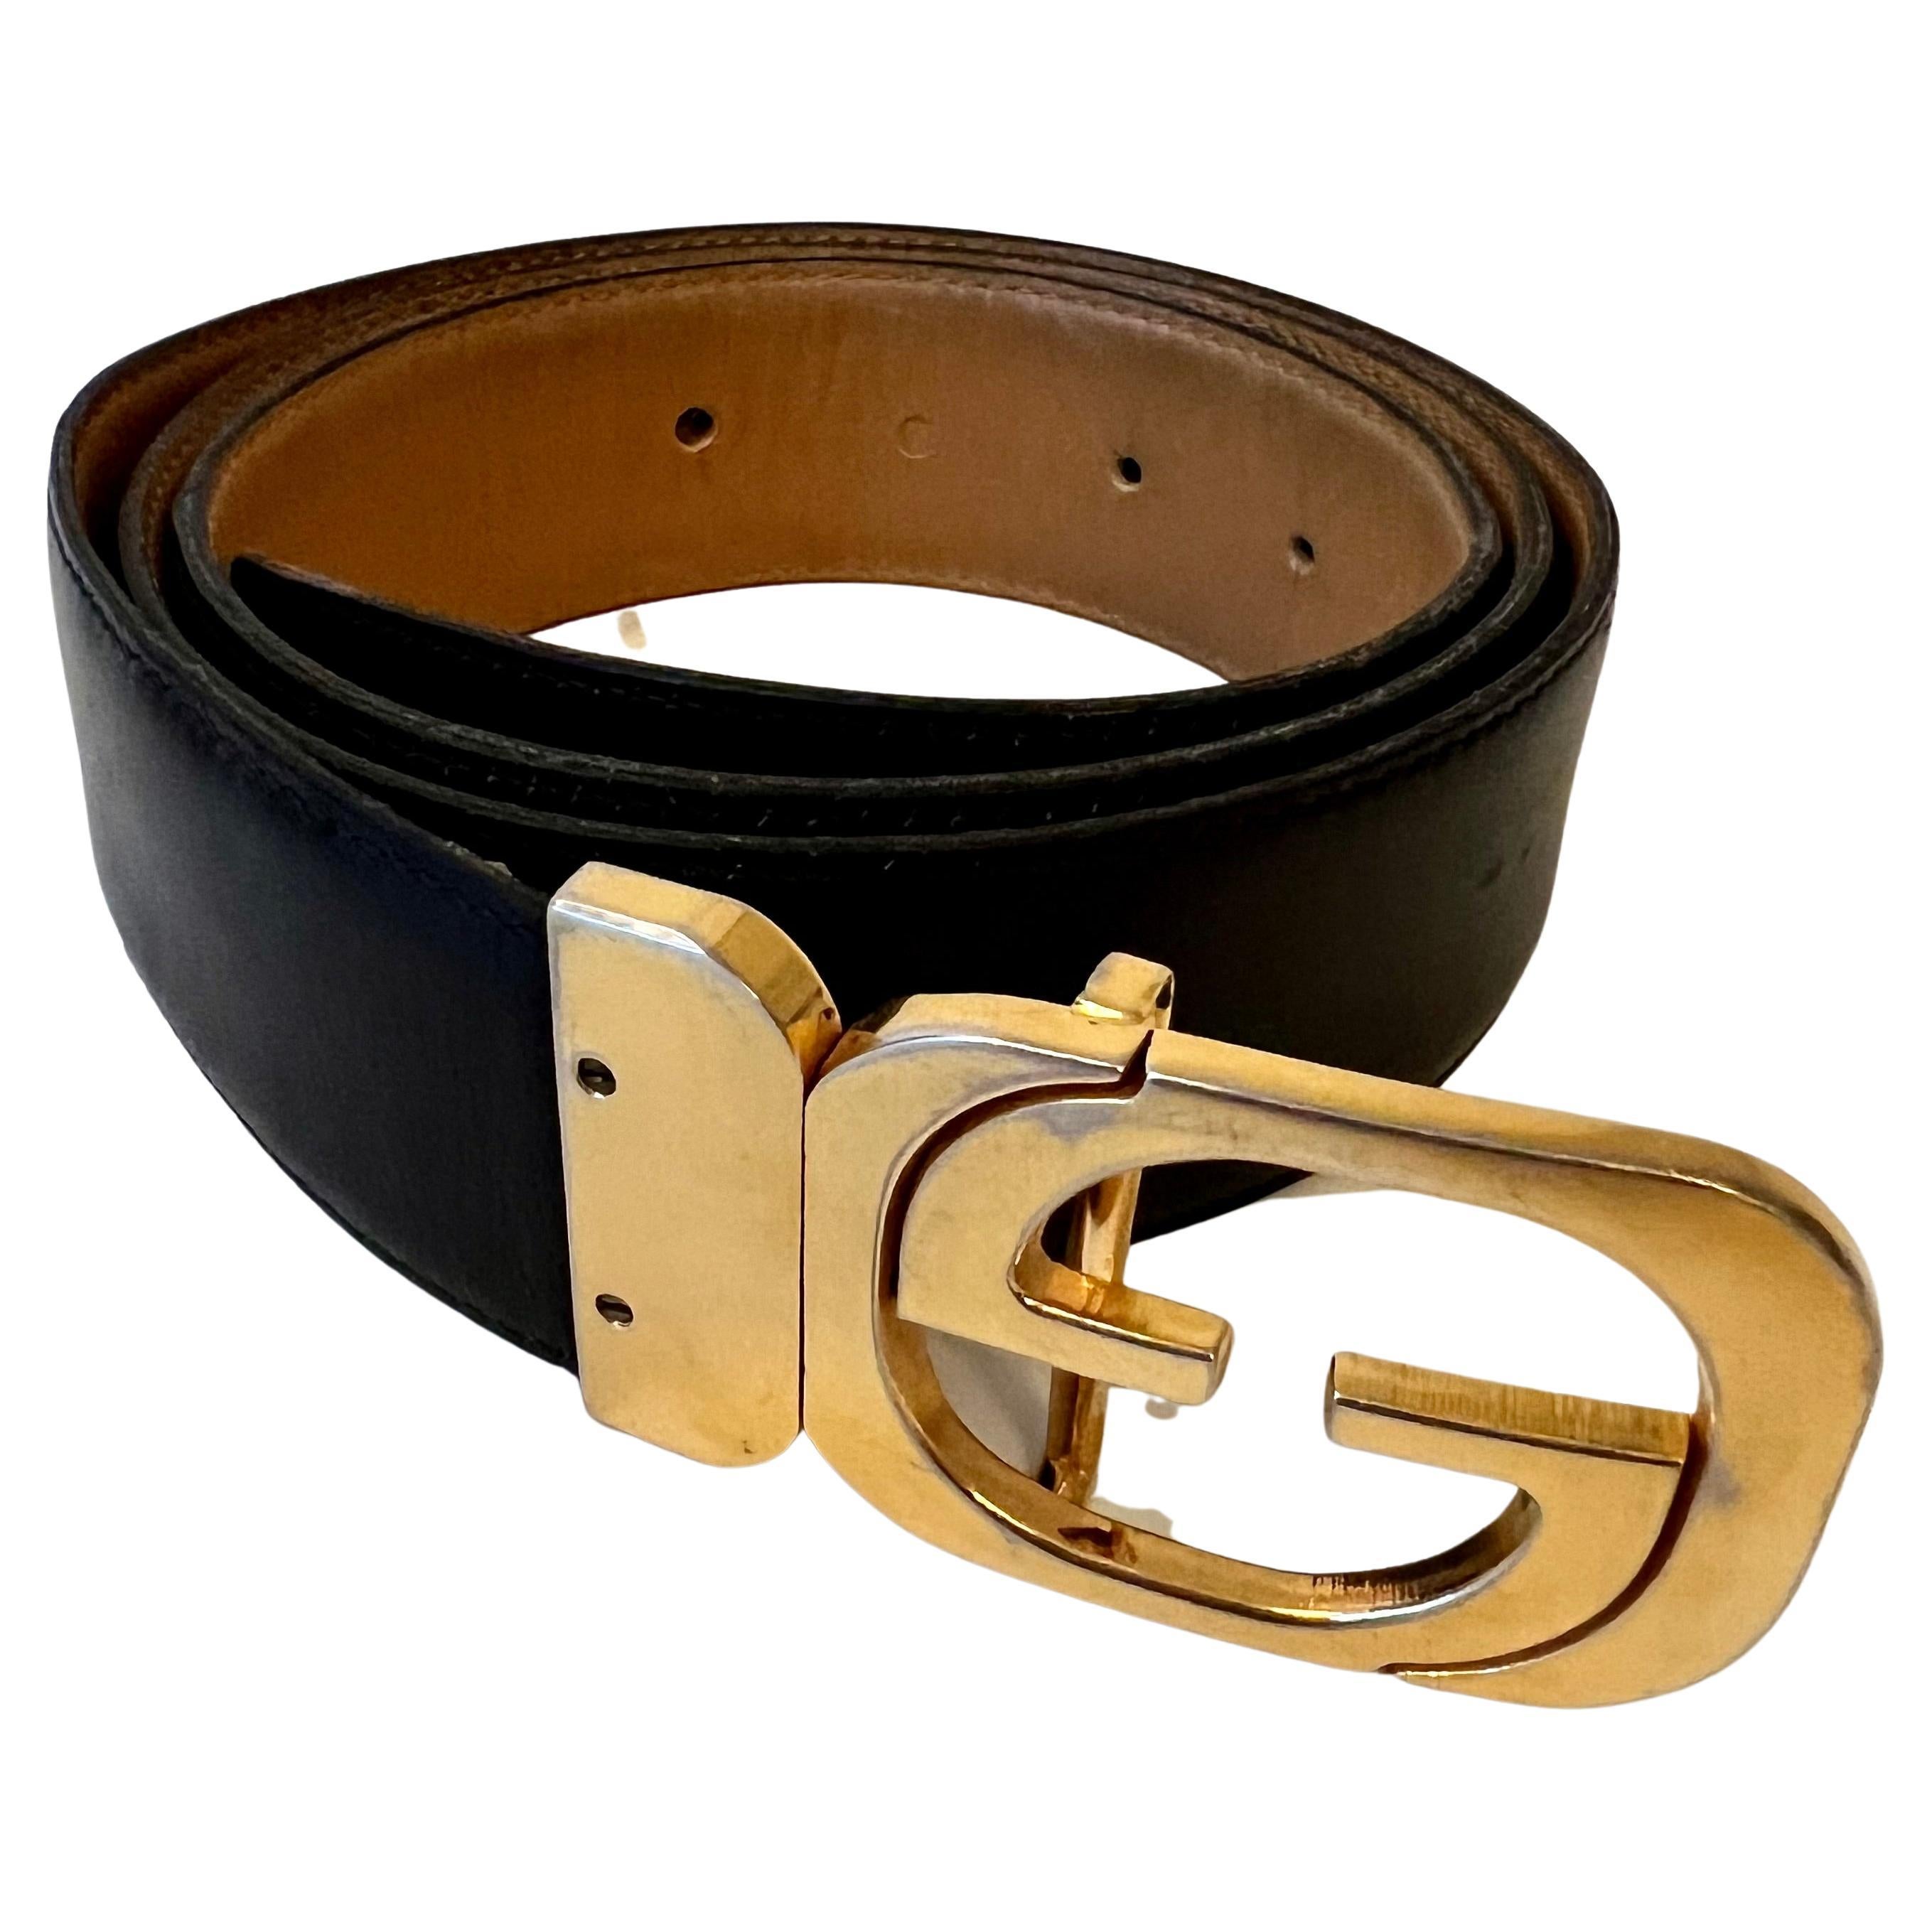 Gucci Men's Reversible Monogrammed Leather Belt